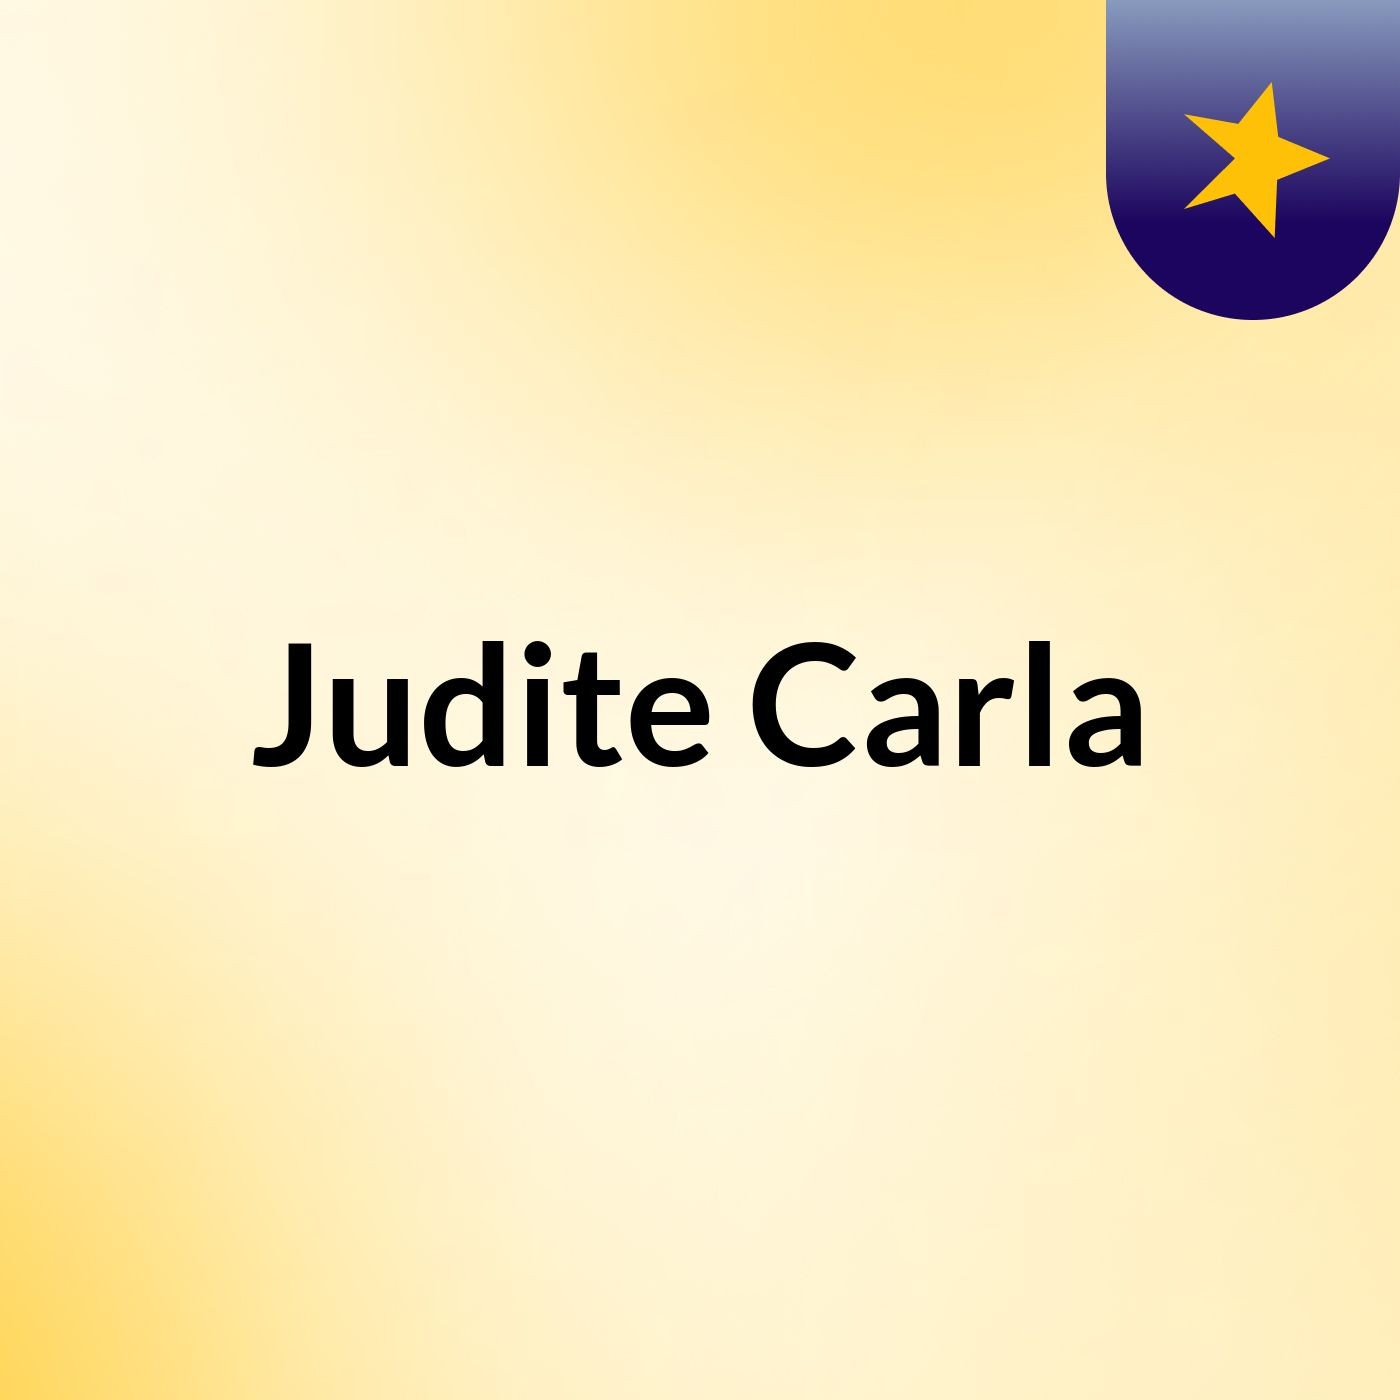 Judite Carla